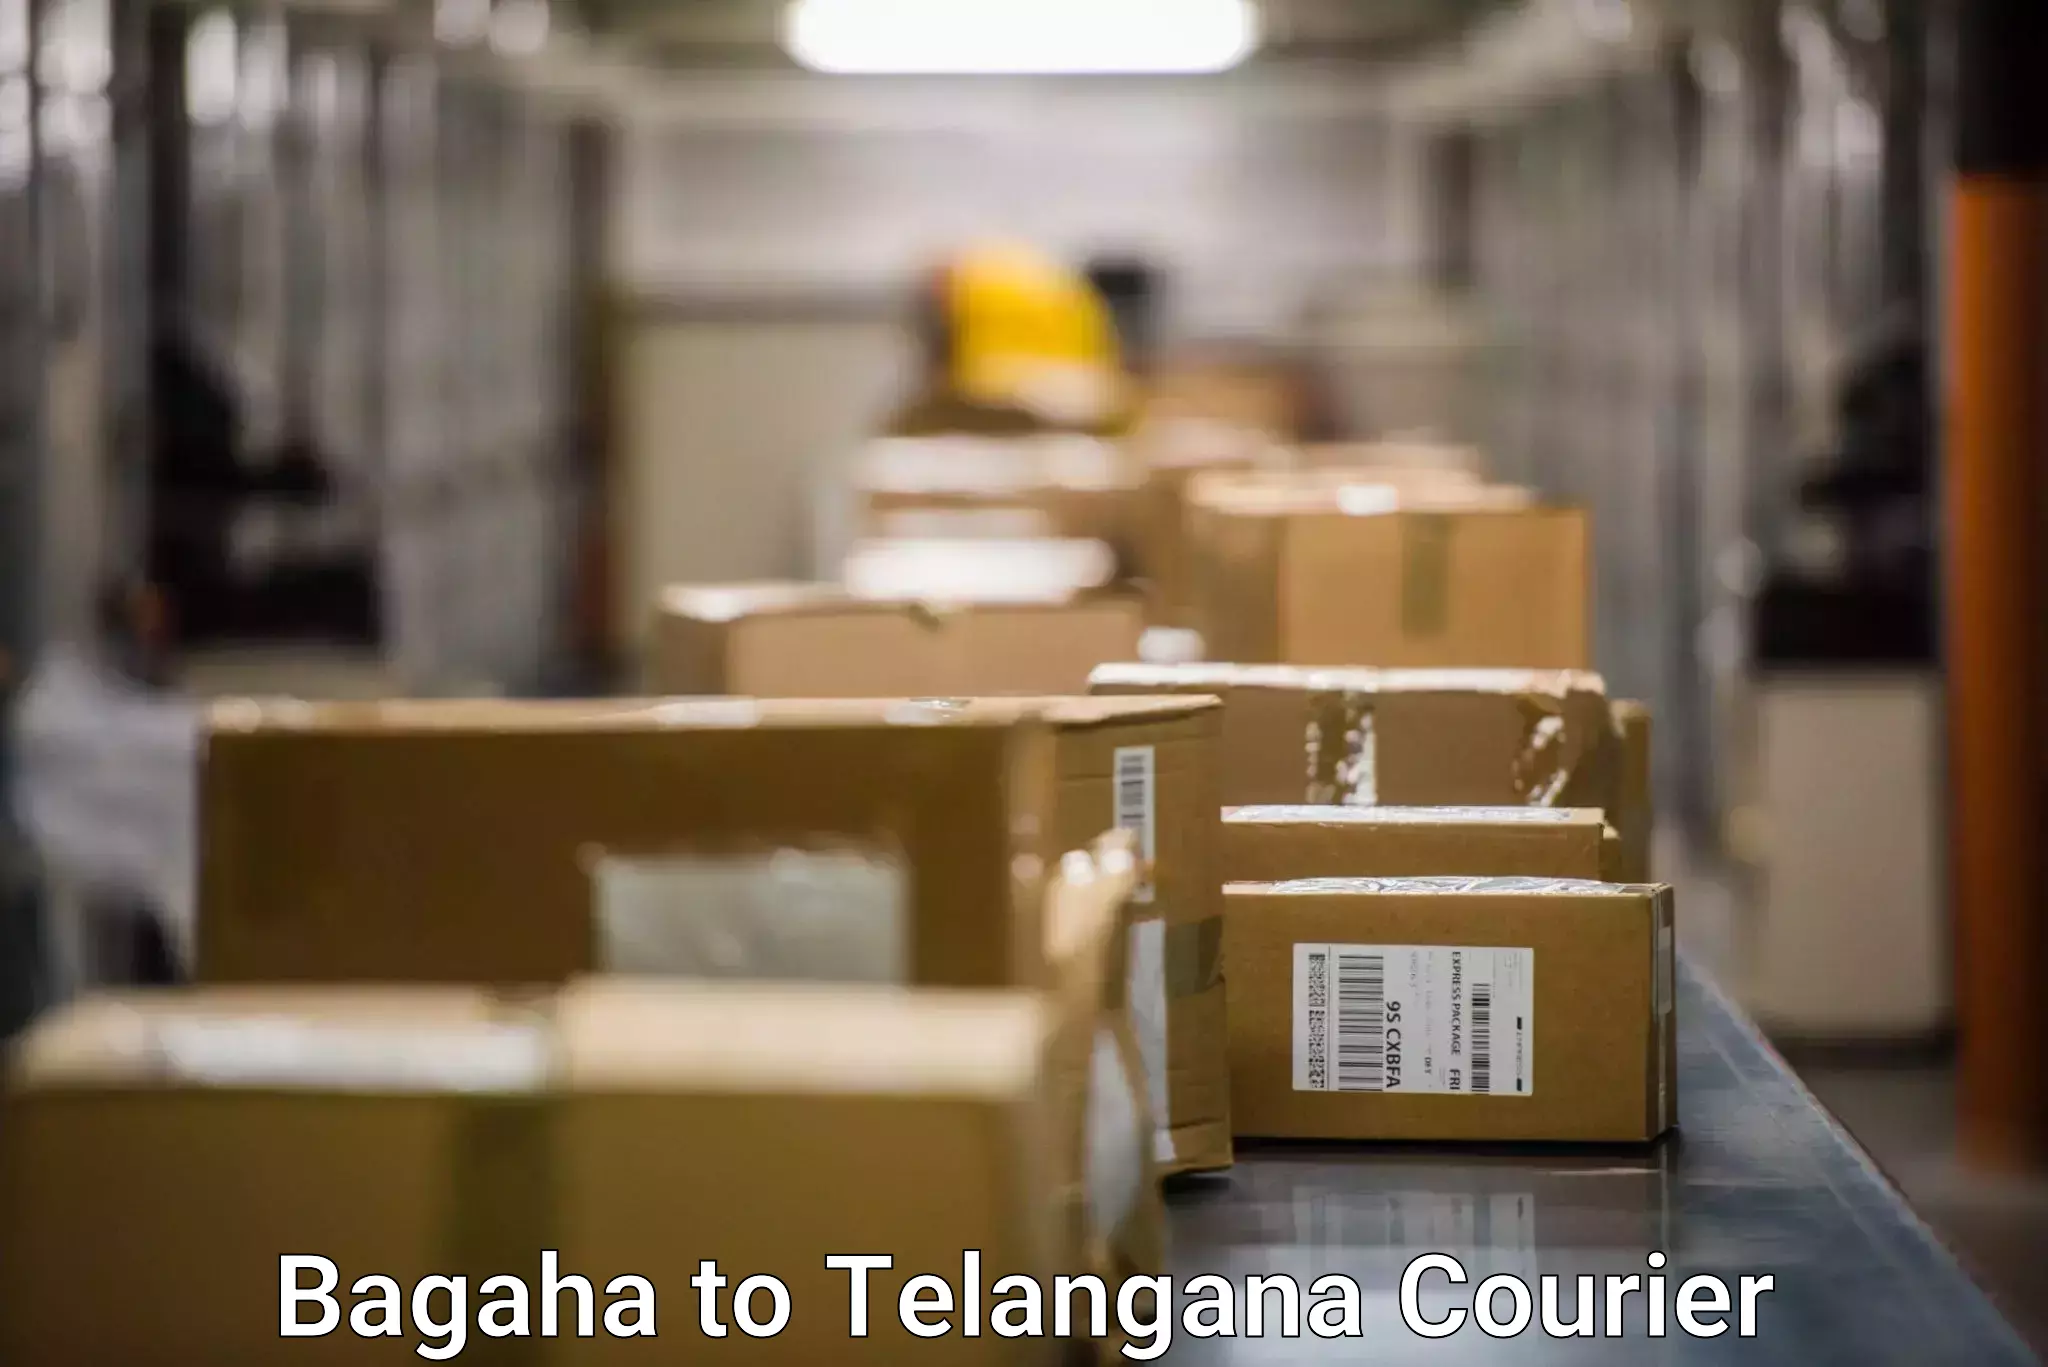 Courier service comparison Bagaha to Telangana